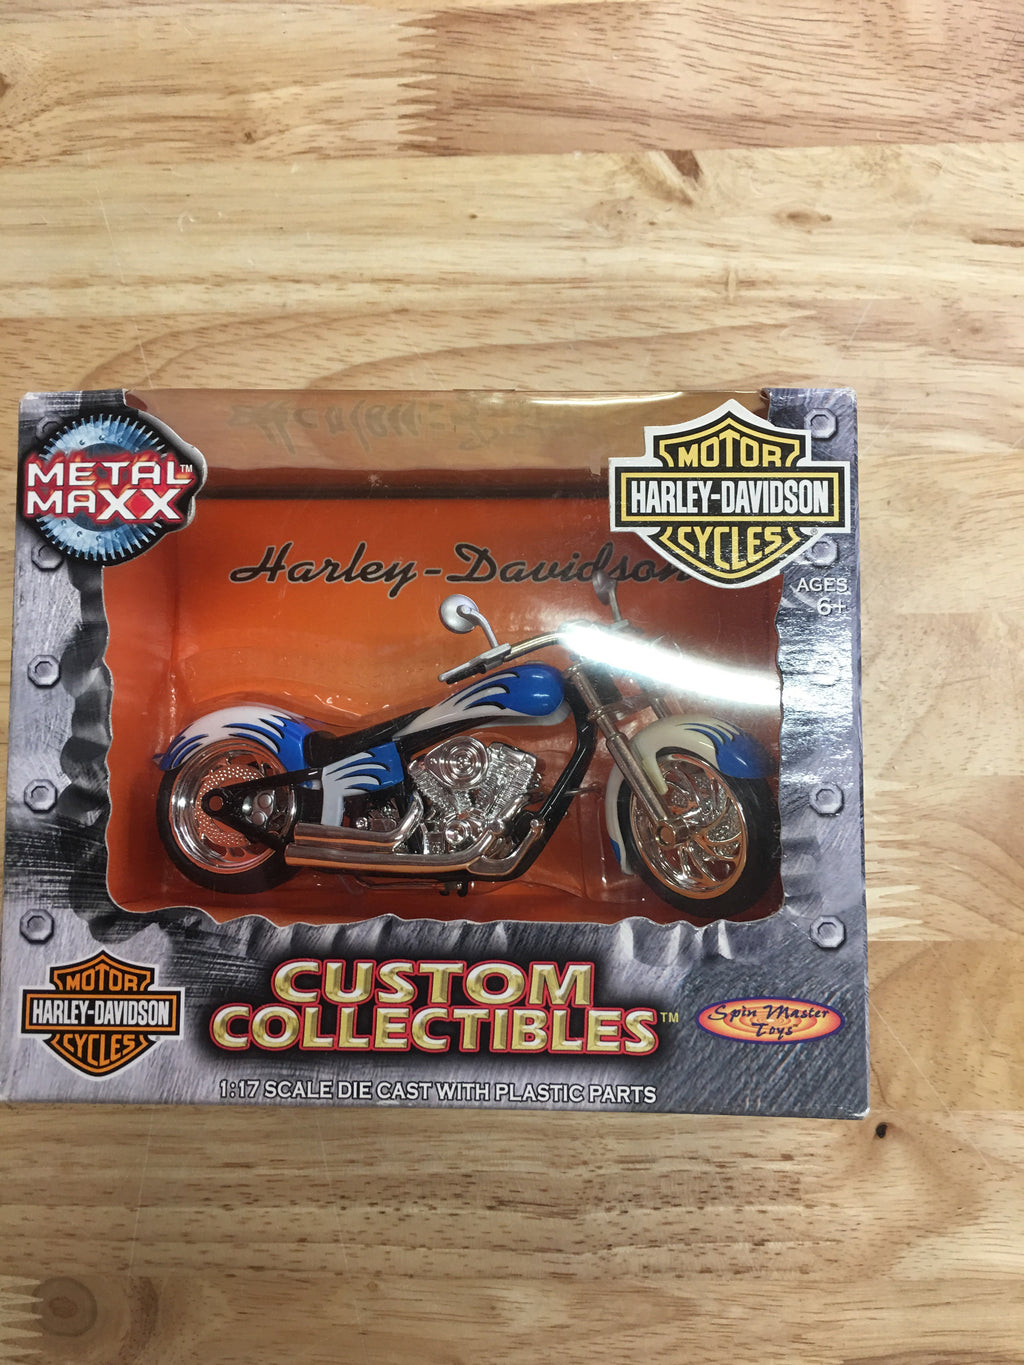 Harley Davidson custom collectibles￼ - Aj Collectibles & More